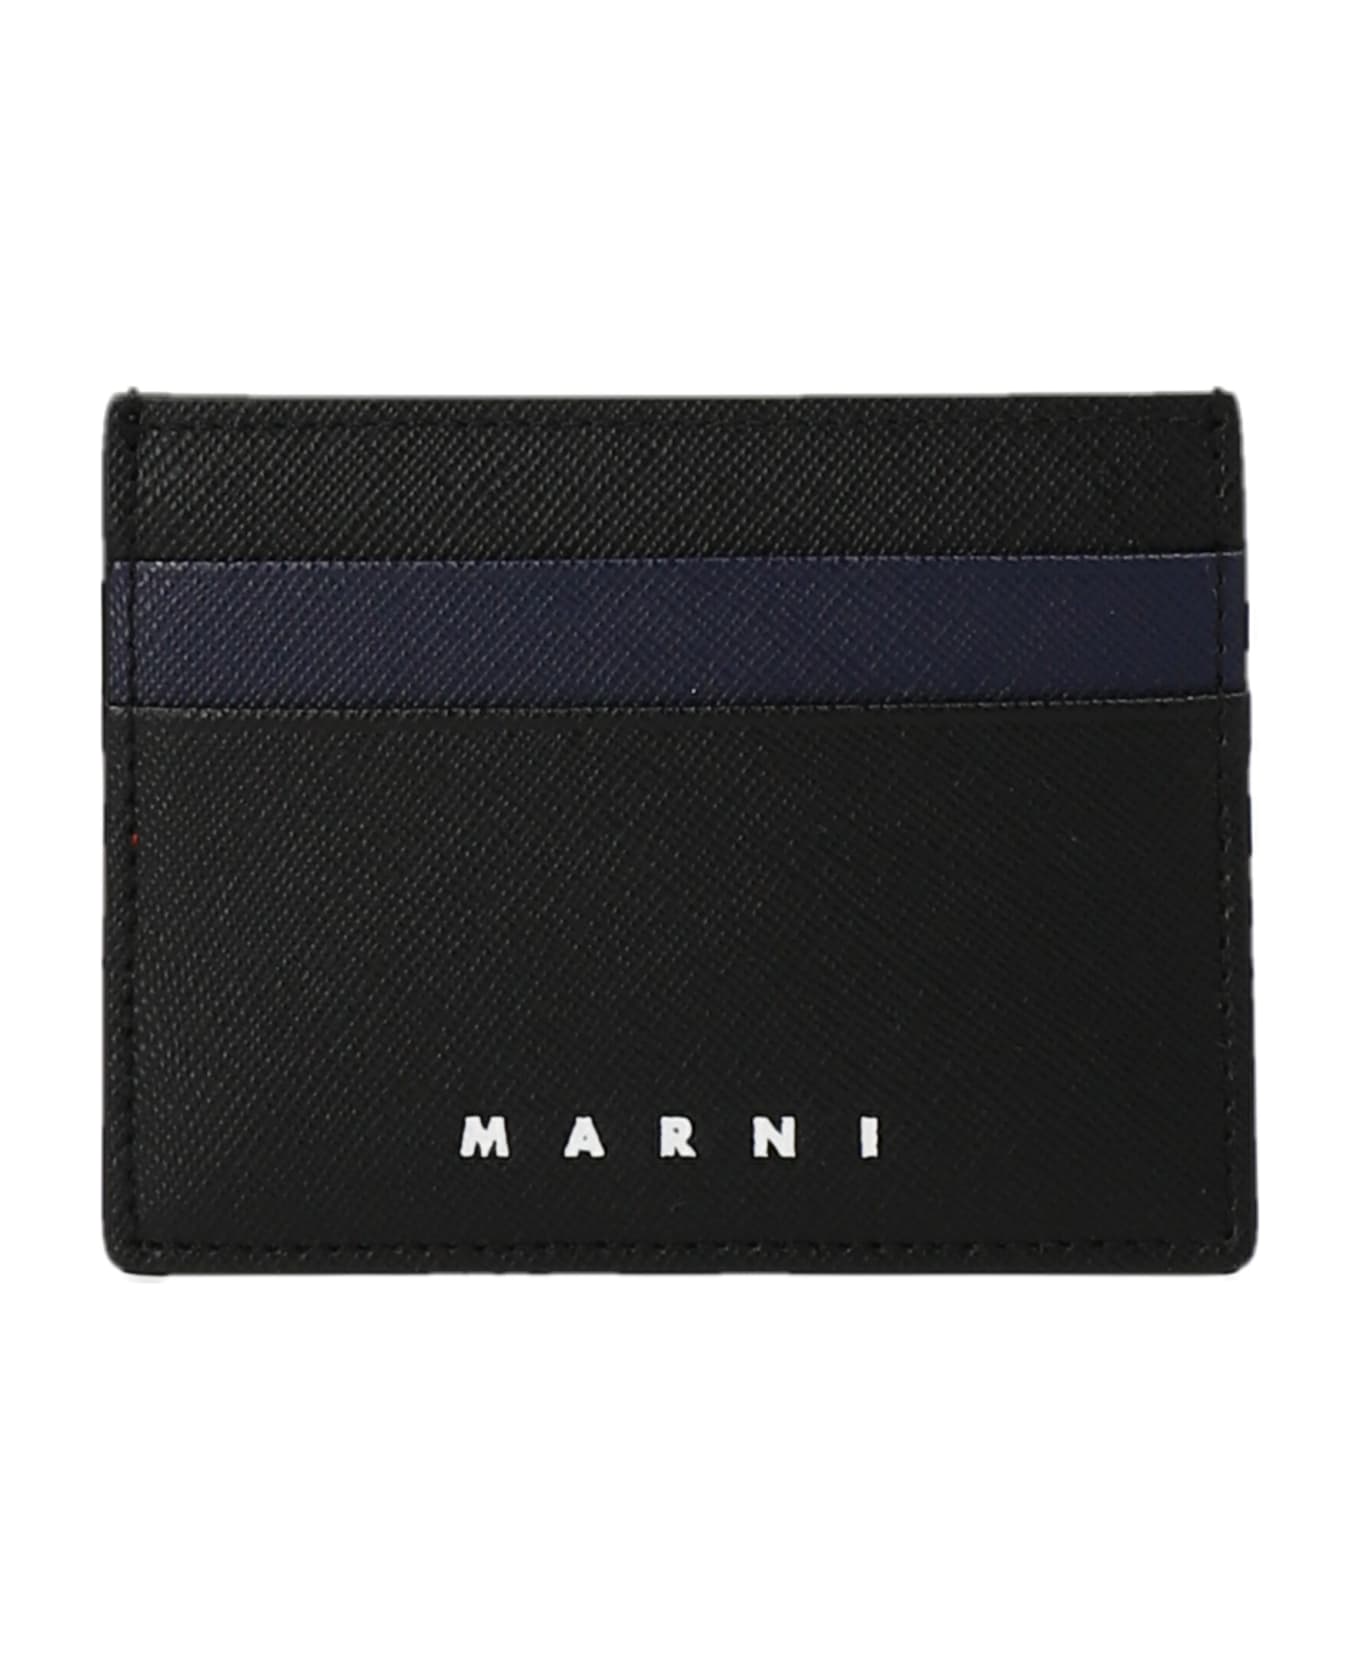 Marni Logo Card Holder - Black   財布